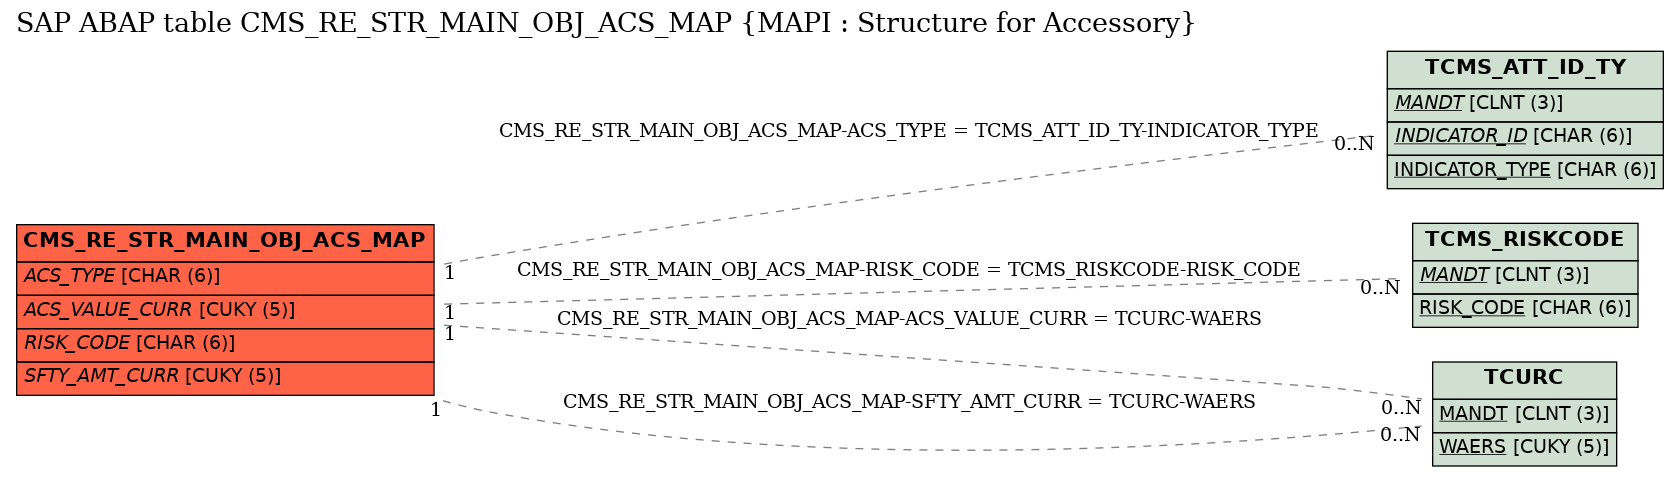 E-R Diagram for table CMS_RE_STR_MAIN_OBJ_ACS_MAP (MAPI : Structure for Accessory)